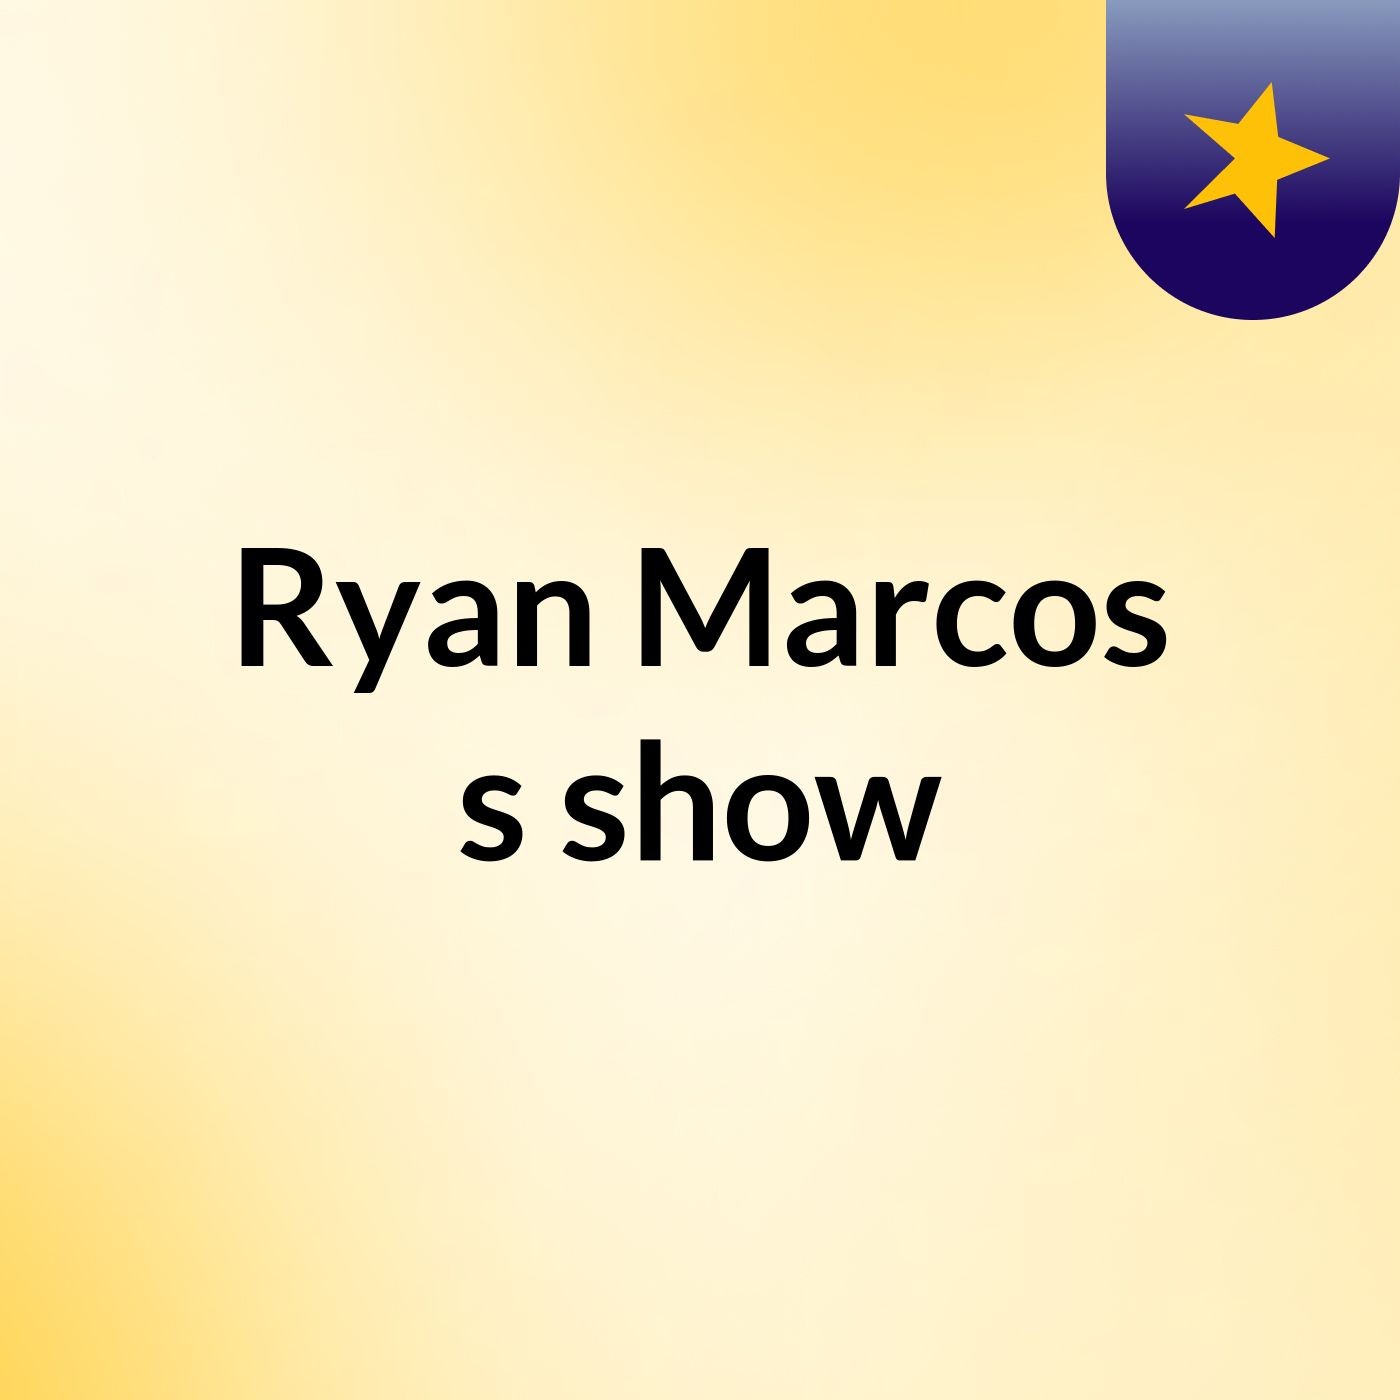 Ryan Marcos's show